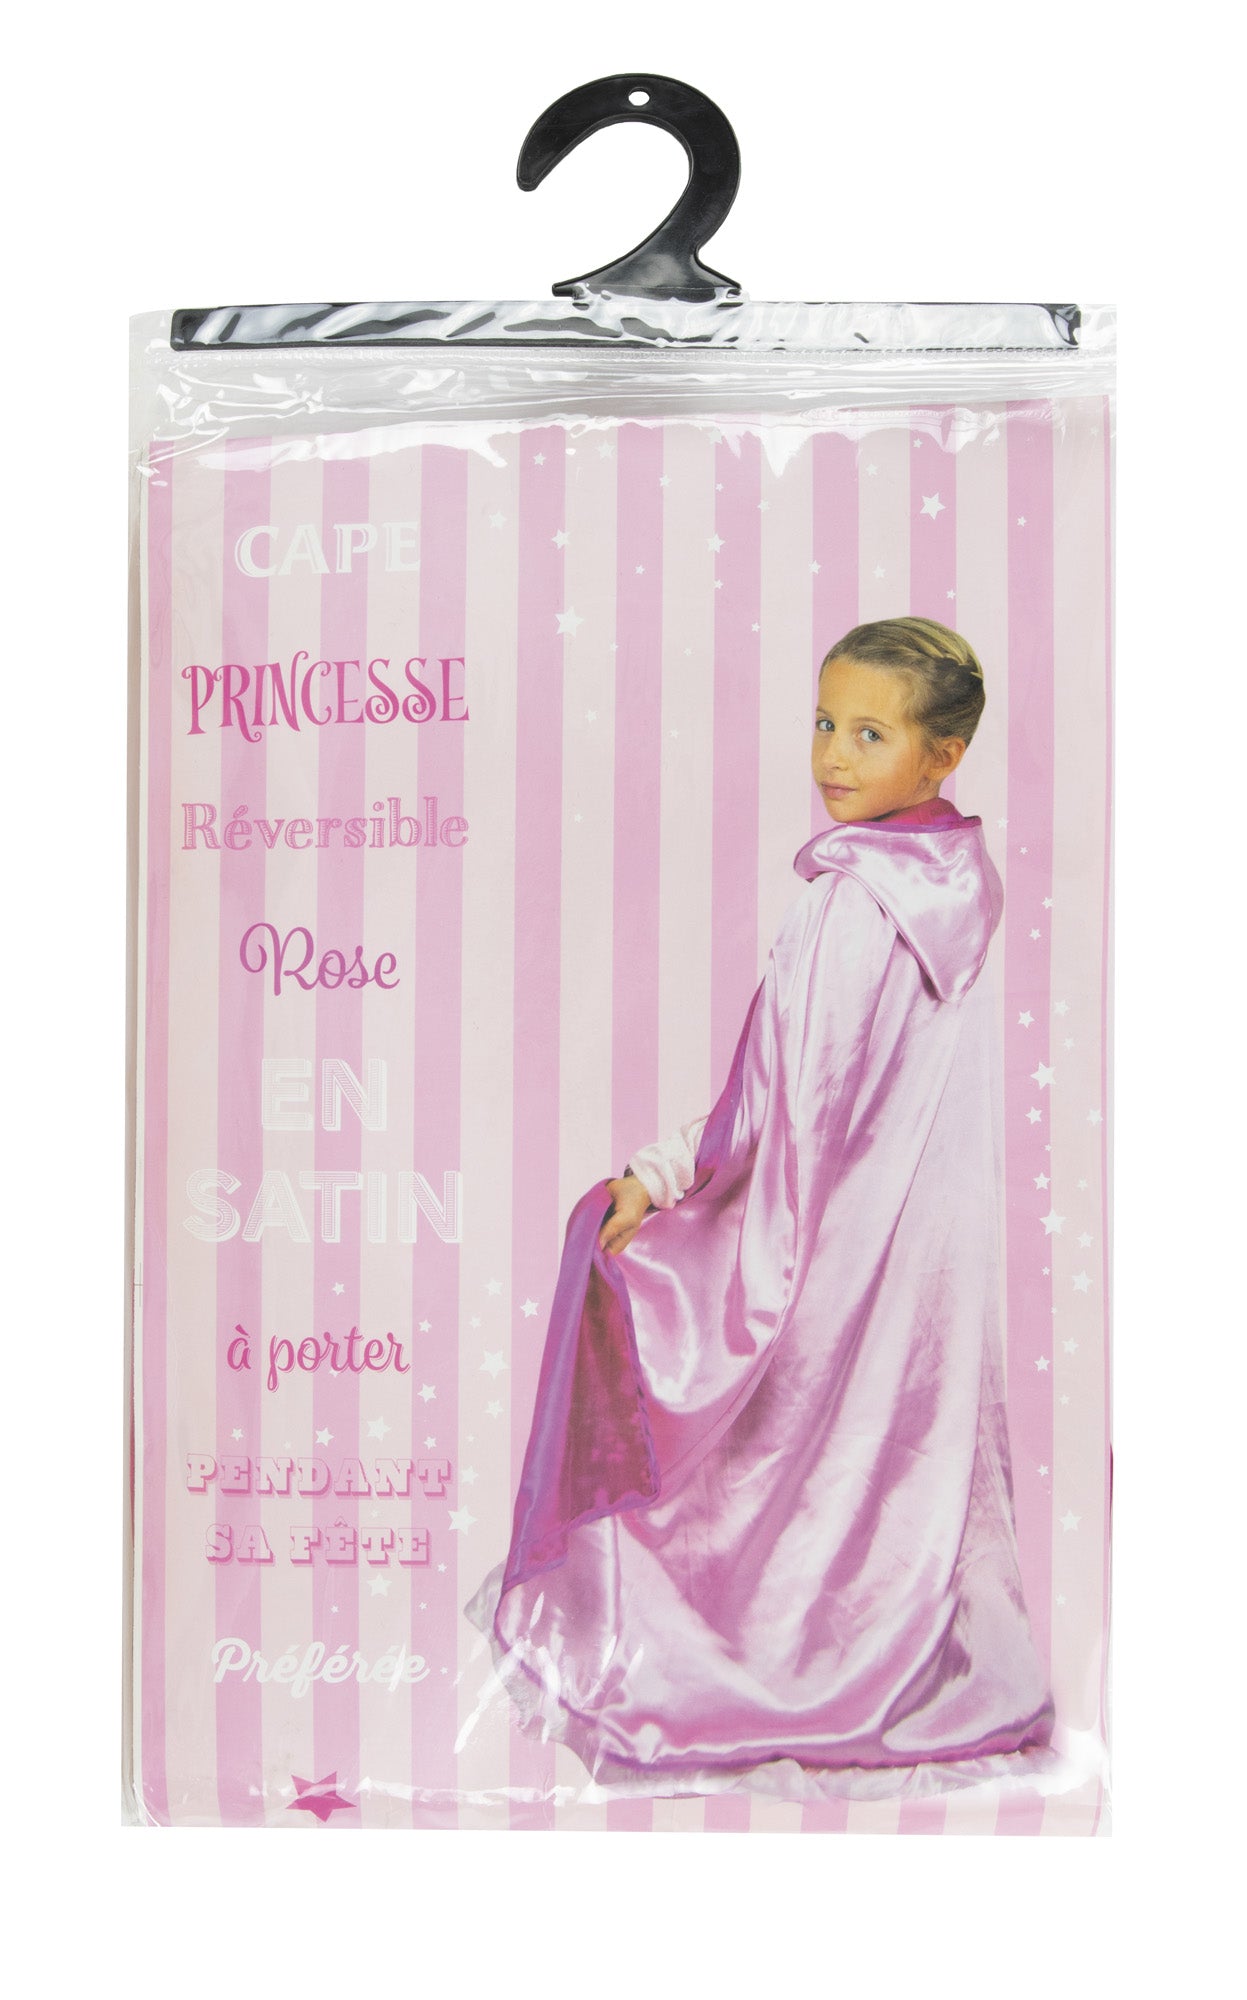 CAPE PRINCESSE REVERSIBLE ROSE ENFANT